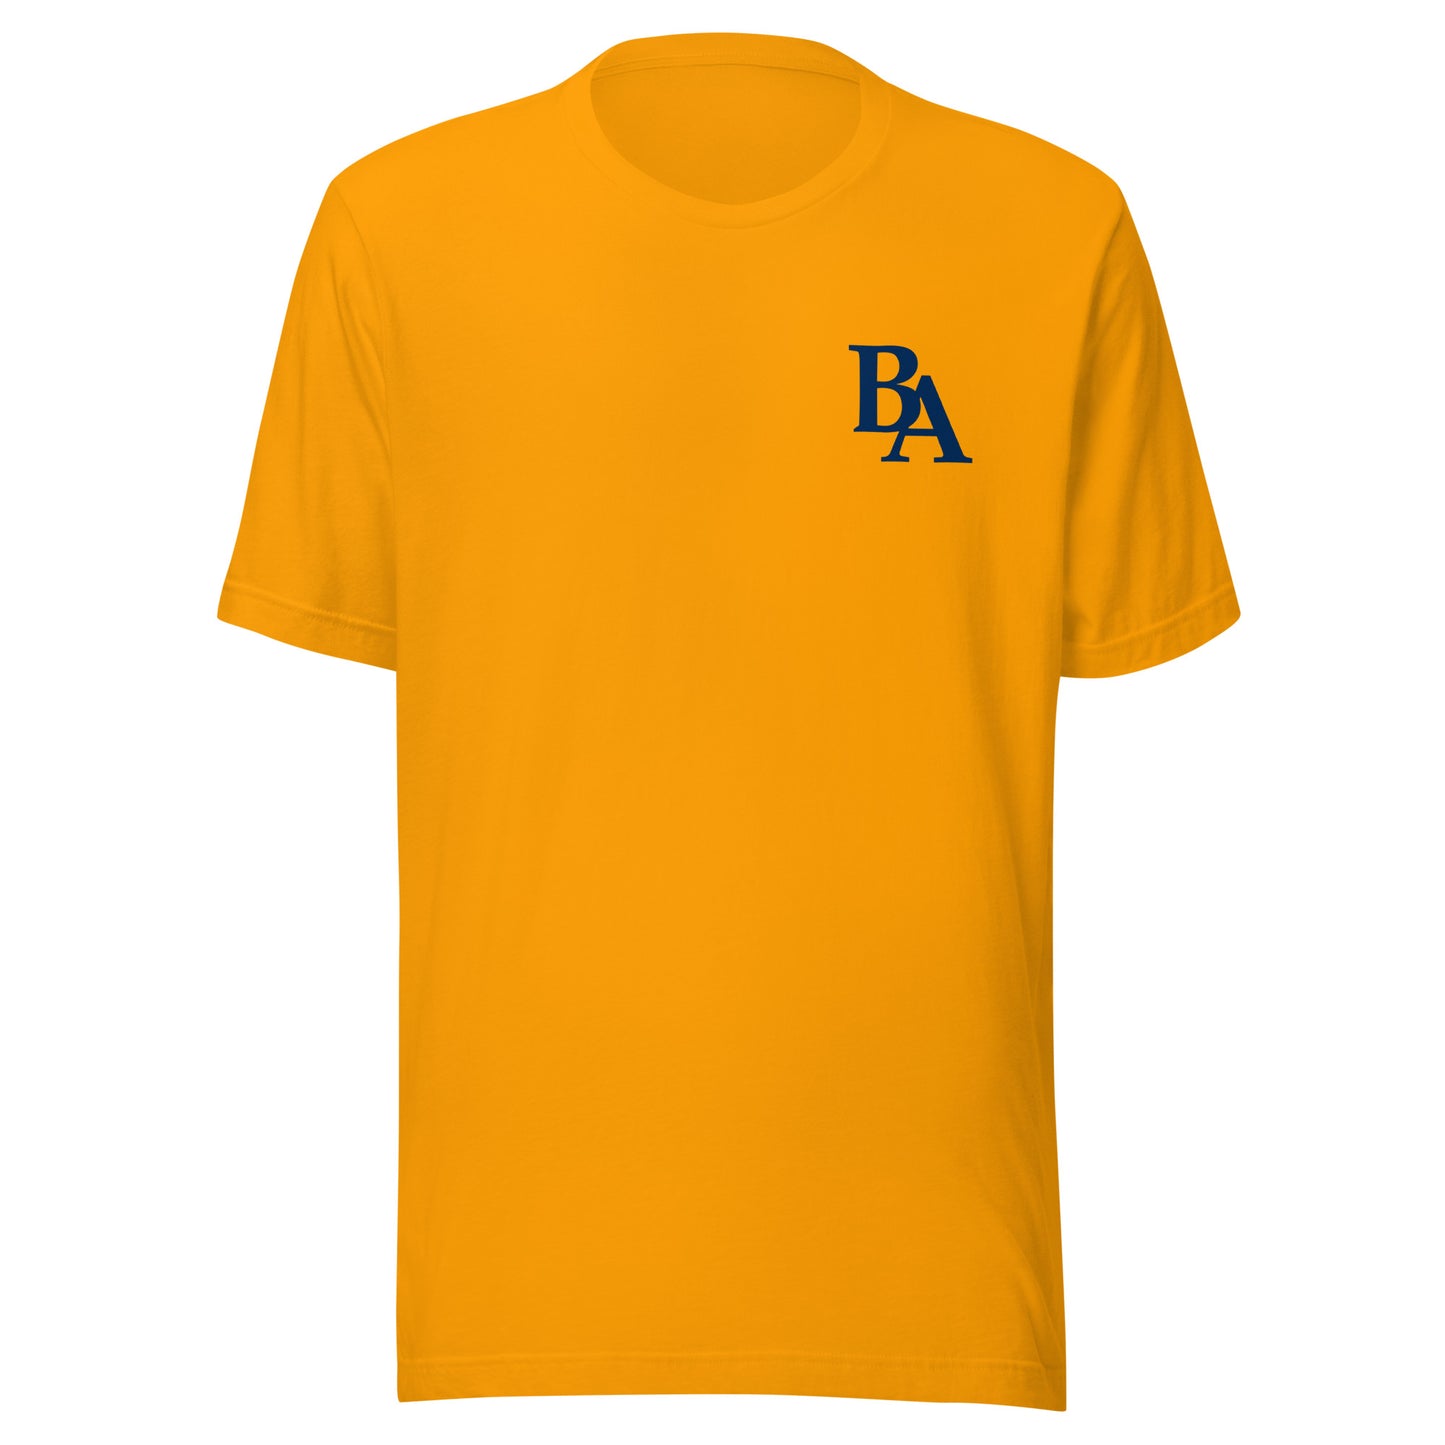 BA Classic Fit T-Shirt